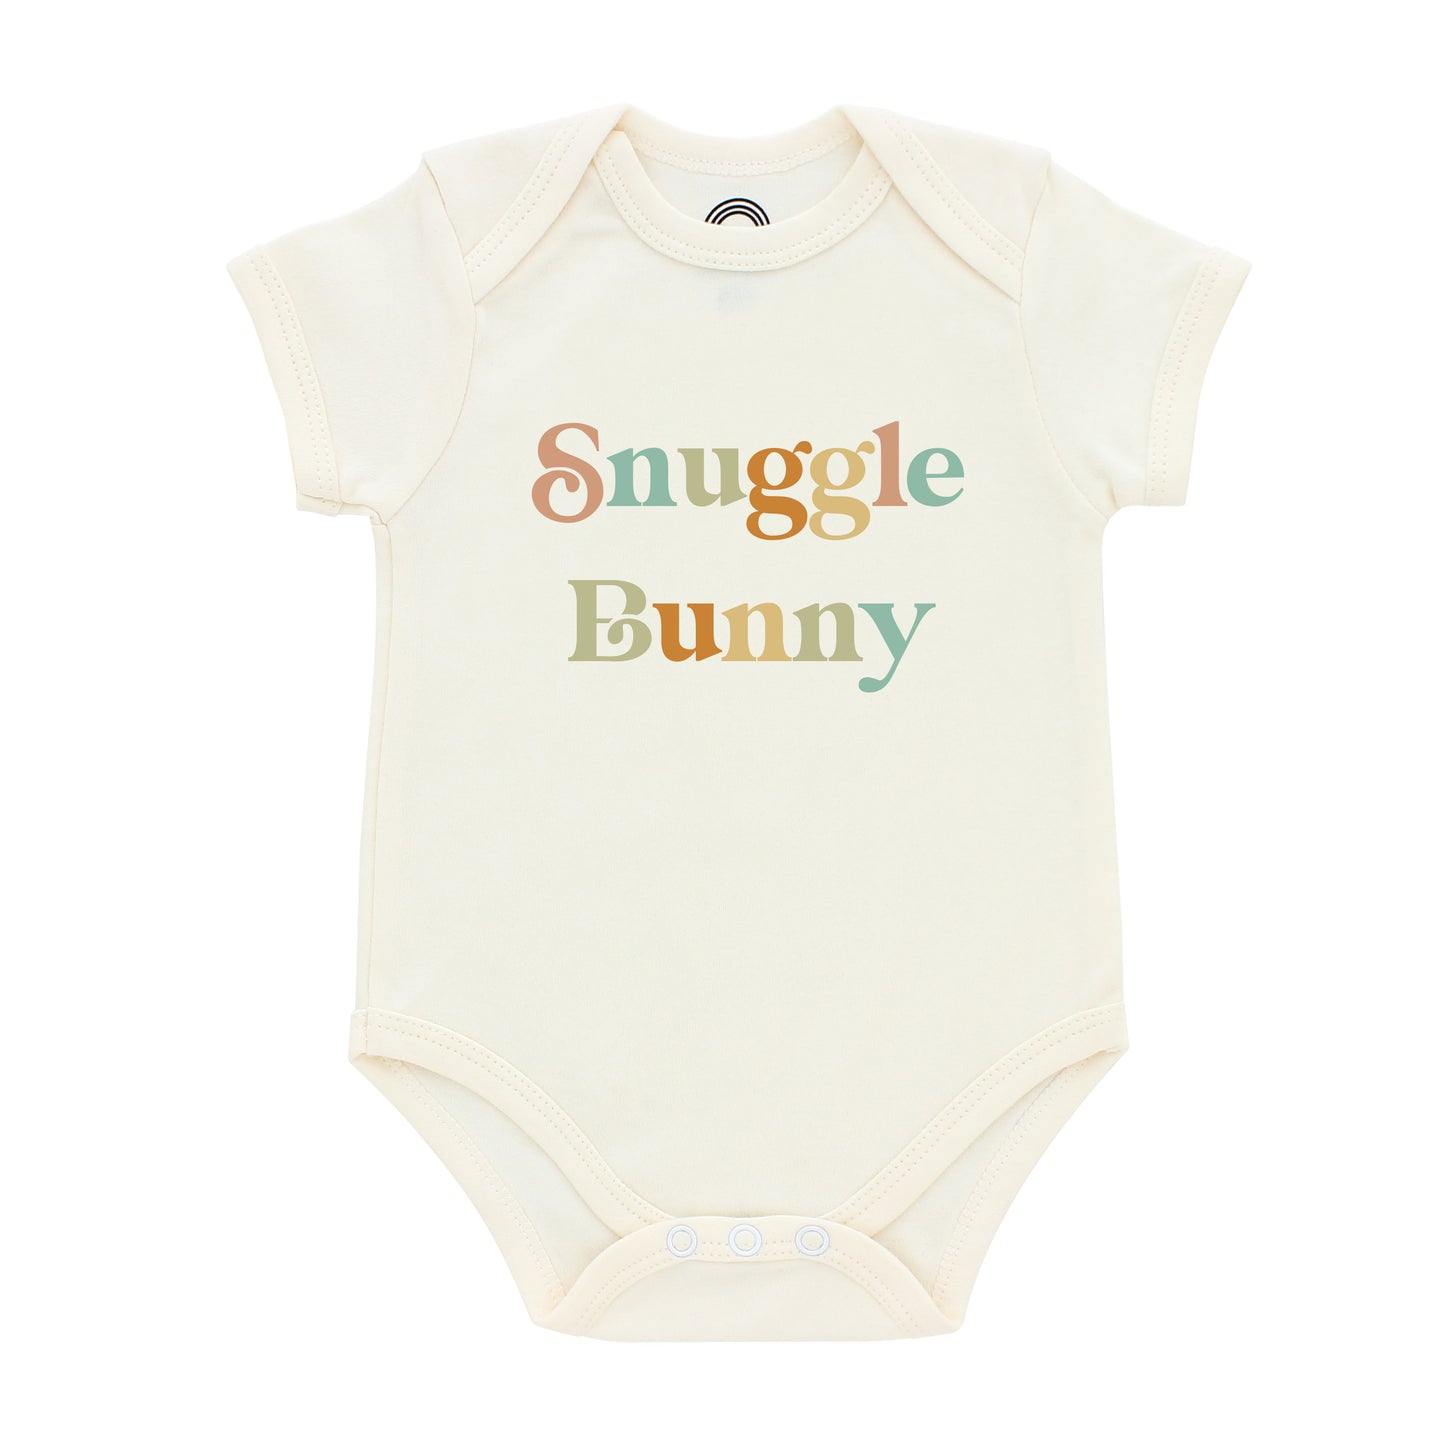 Snuggle Bunny Cotton Baby Onesie